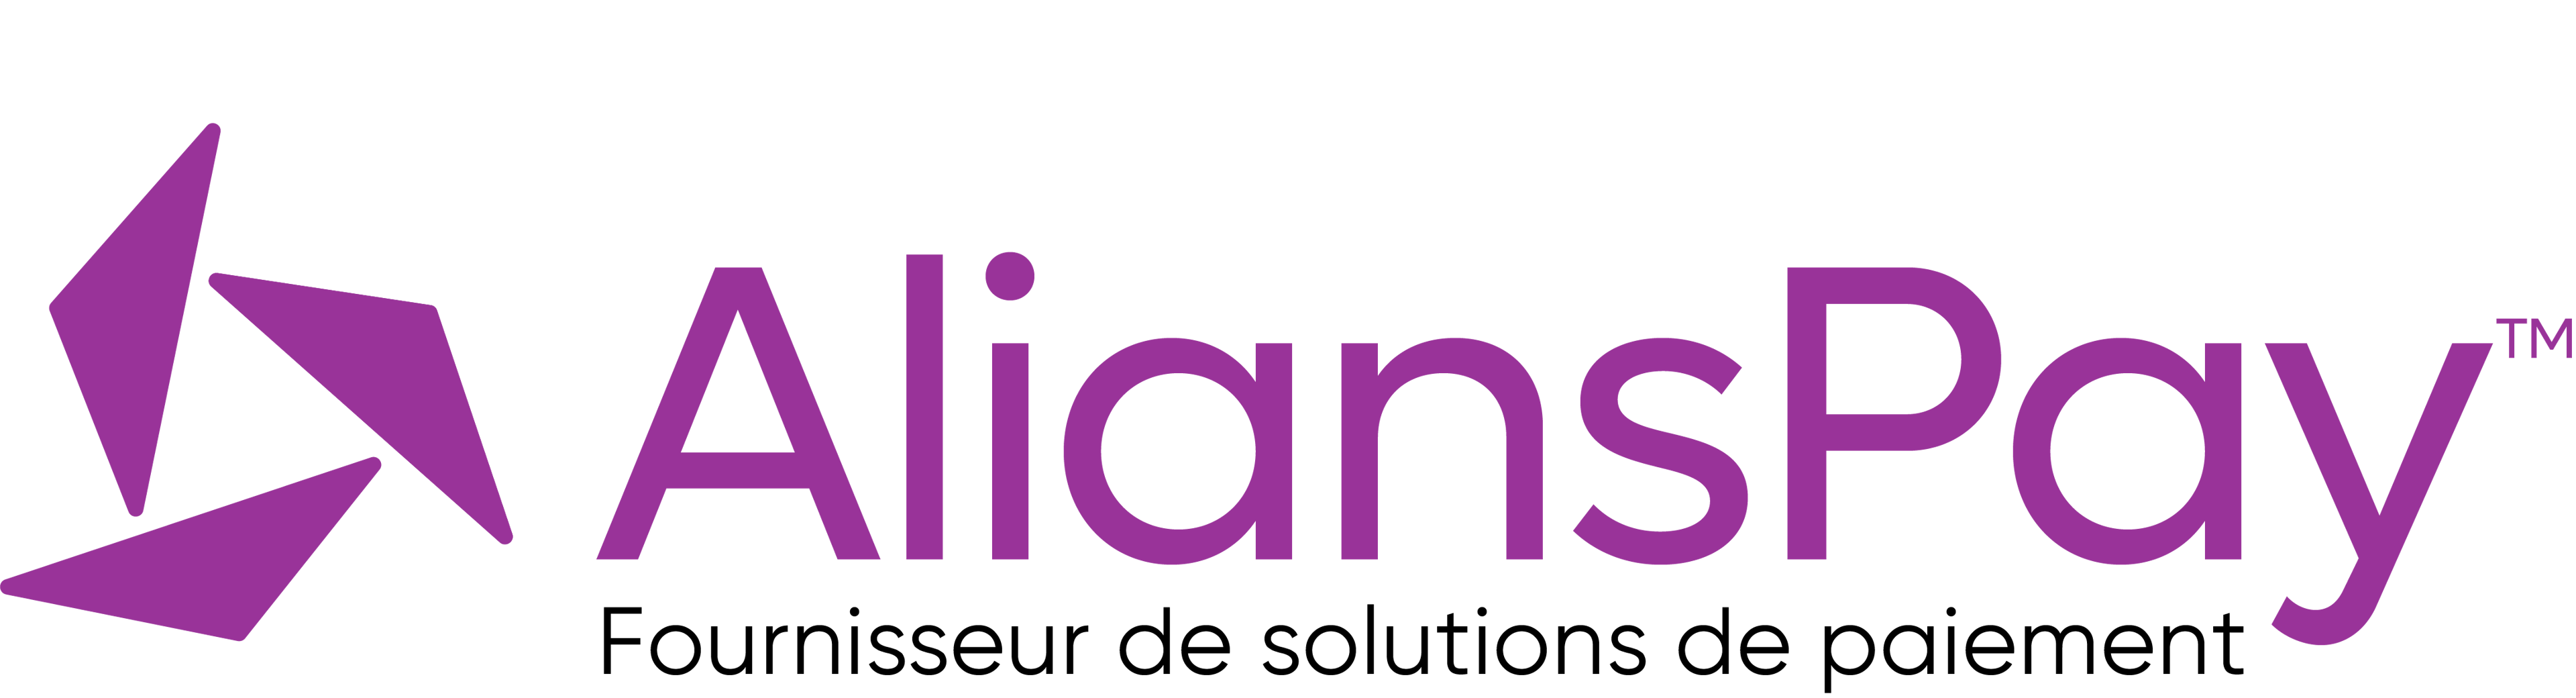 AliansPay logo with text